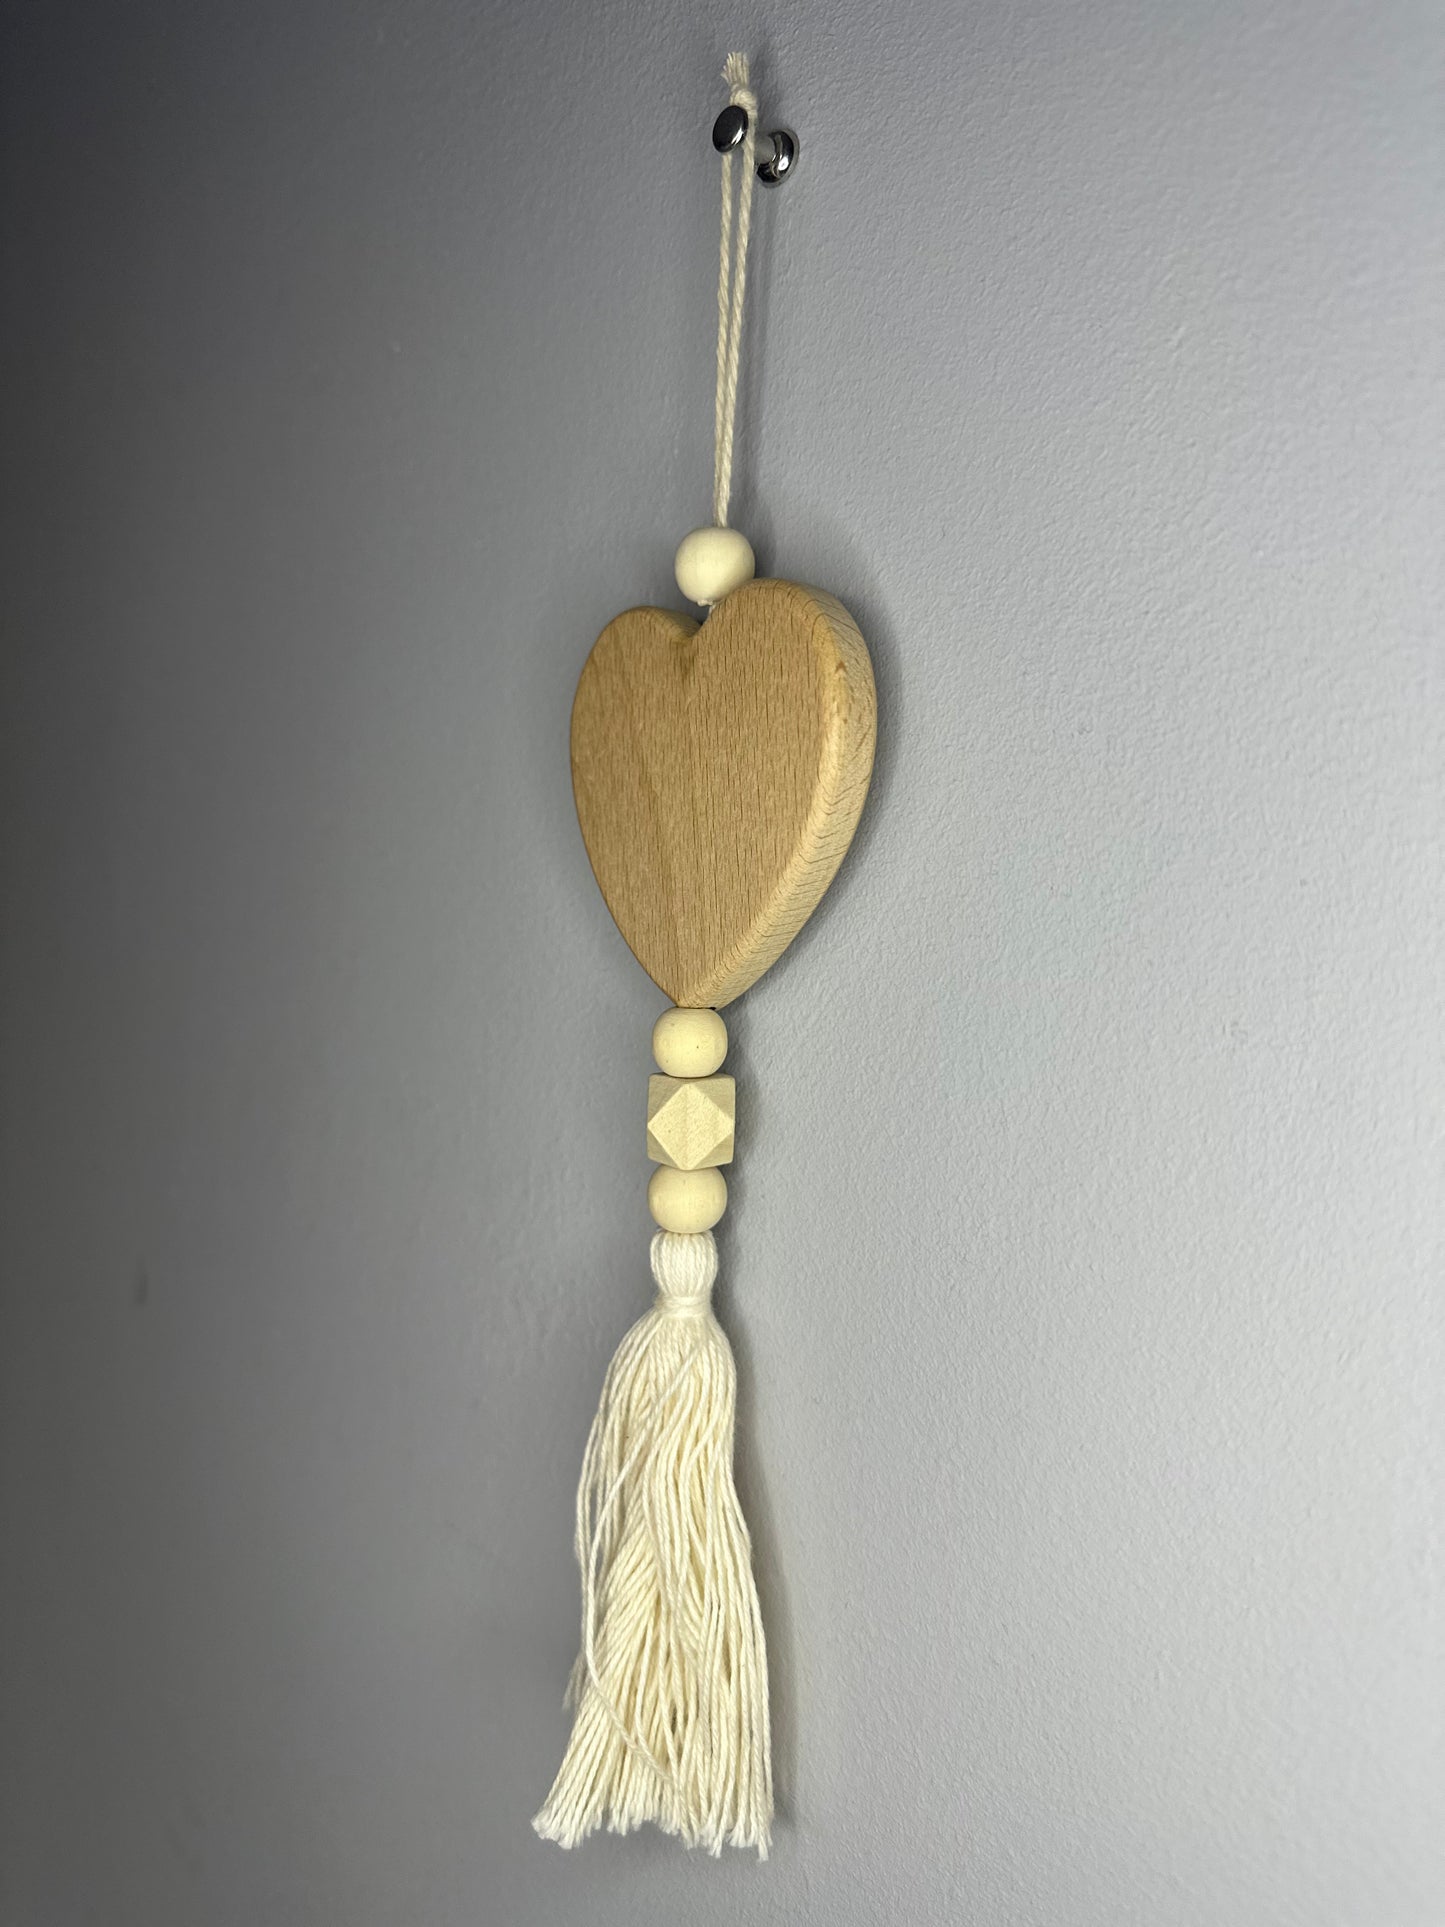 Wooden Tassell Hanging Heart